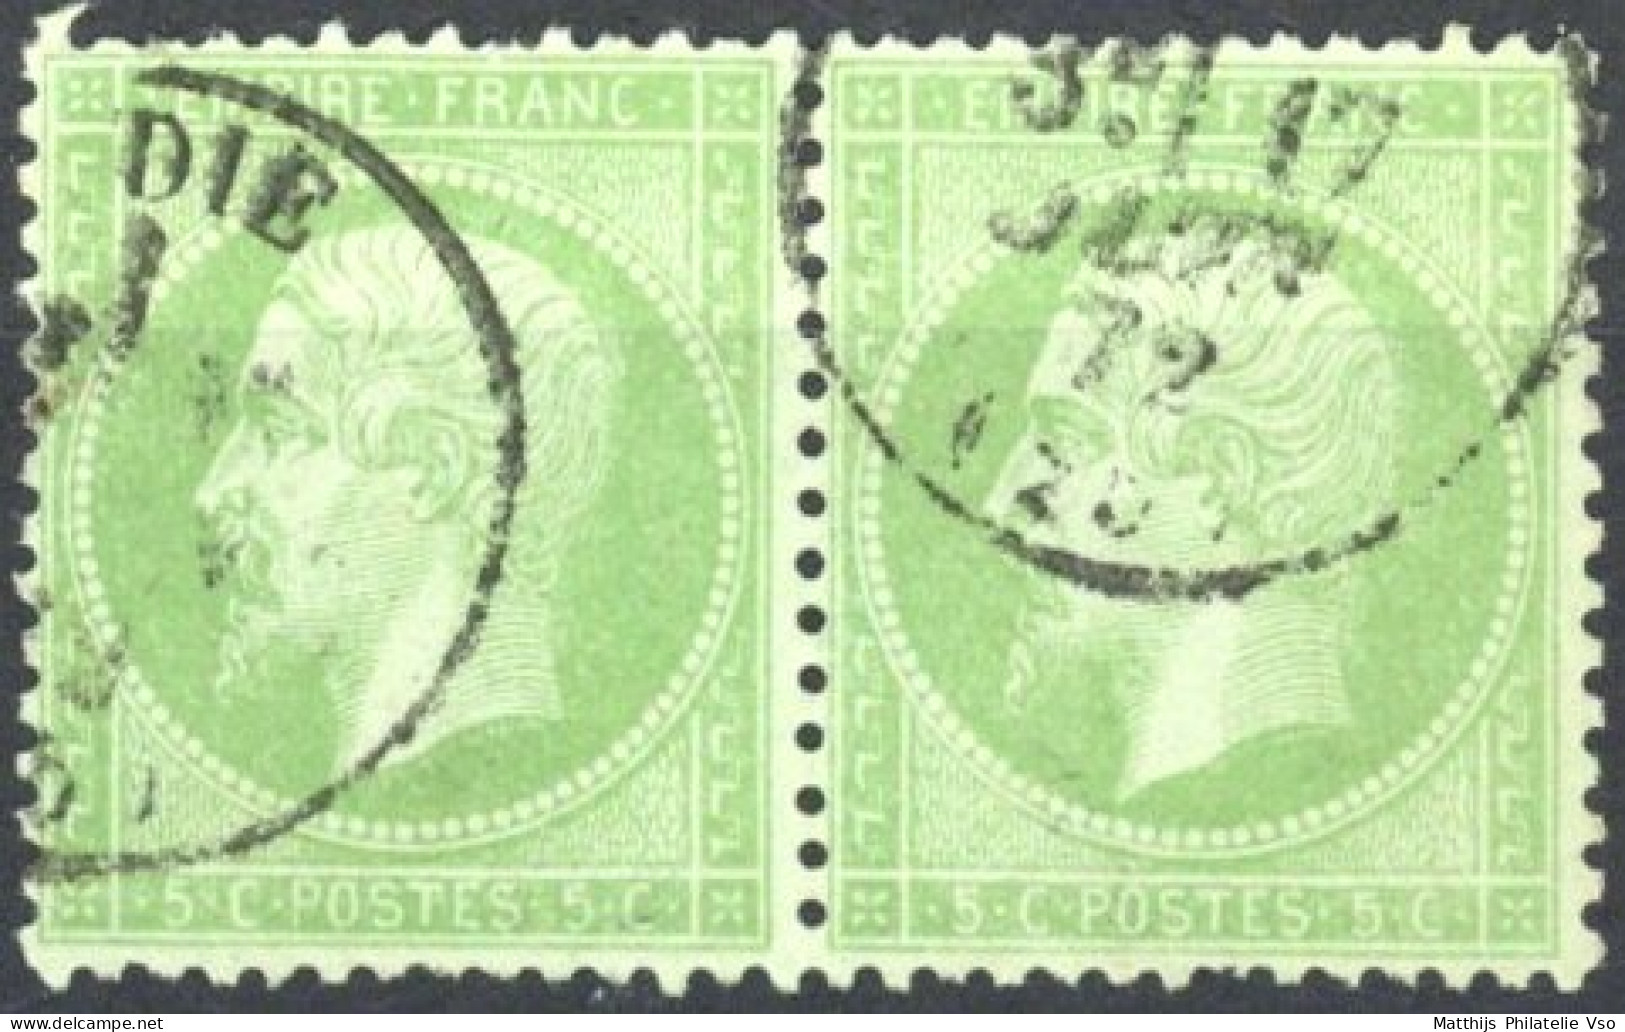 [O TB] N° 35, 5c Vert Pâle/bleu, Jolie Paire - TB Obl Càd - Cote: 500€ - 1863-1870 Napoleon III Gelauwerd